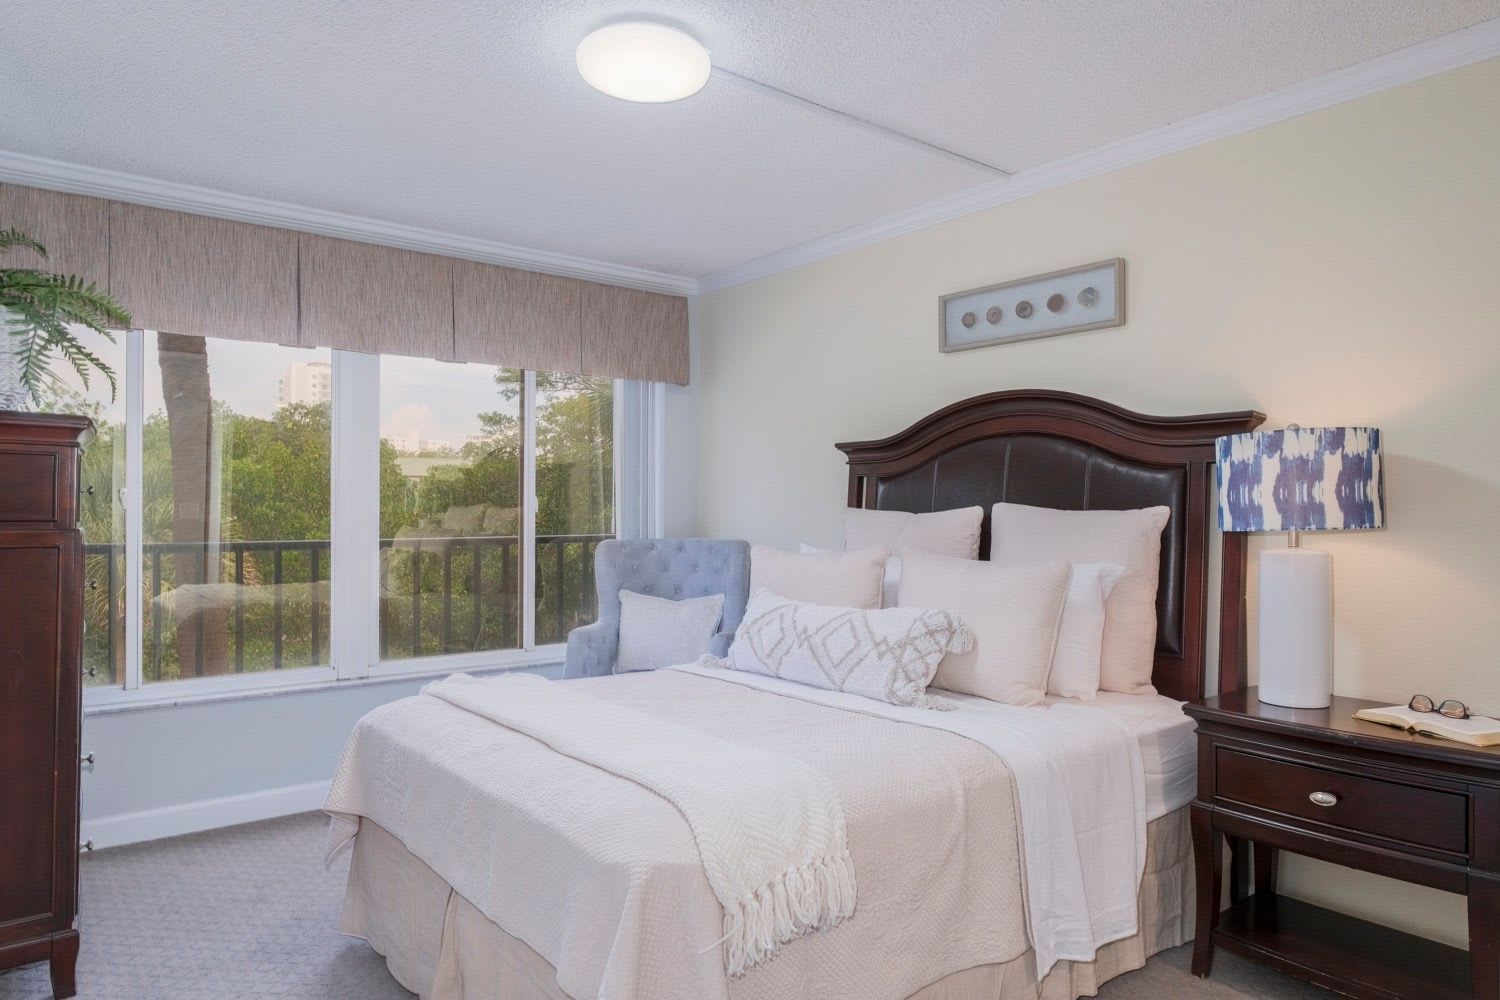 Cozy bedroom at Grand Villa of Sarasota in Sarasota, Florida